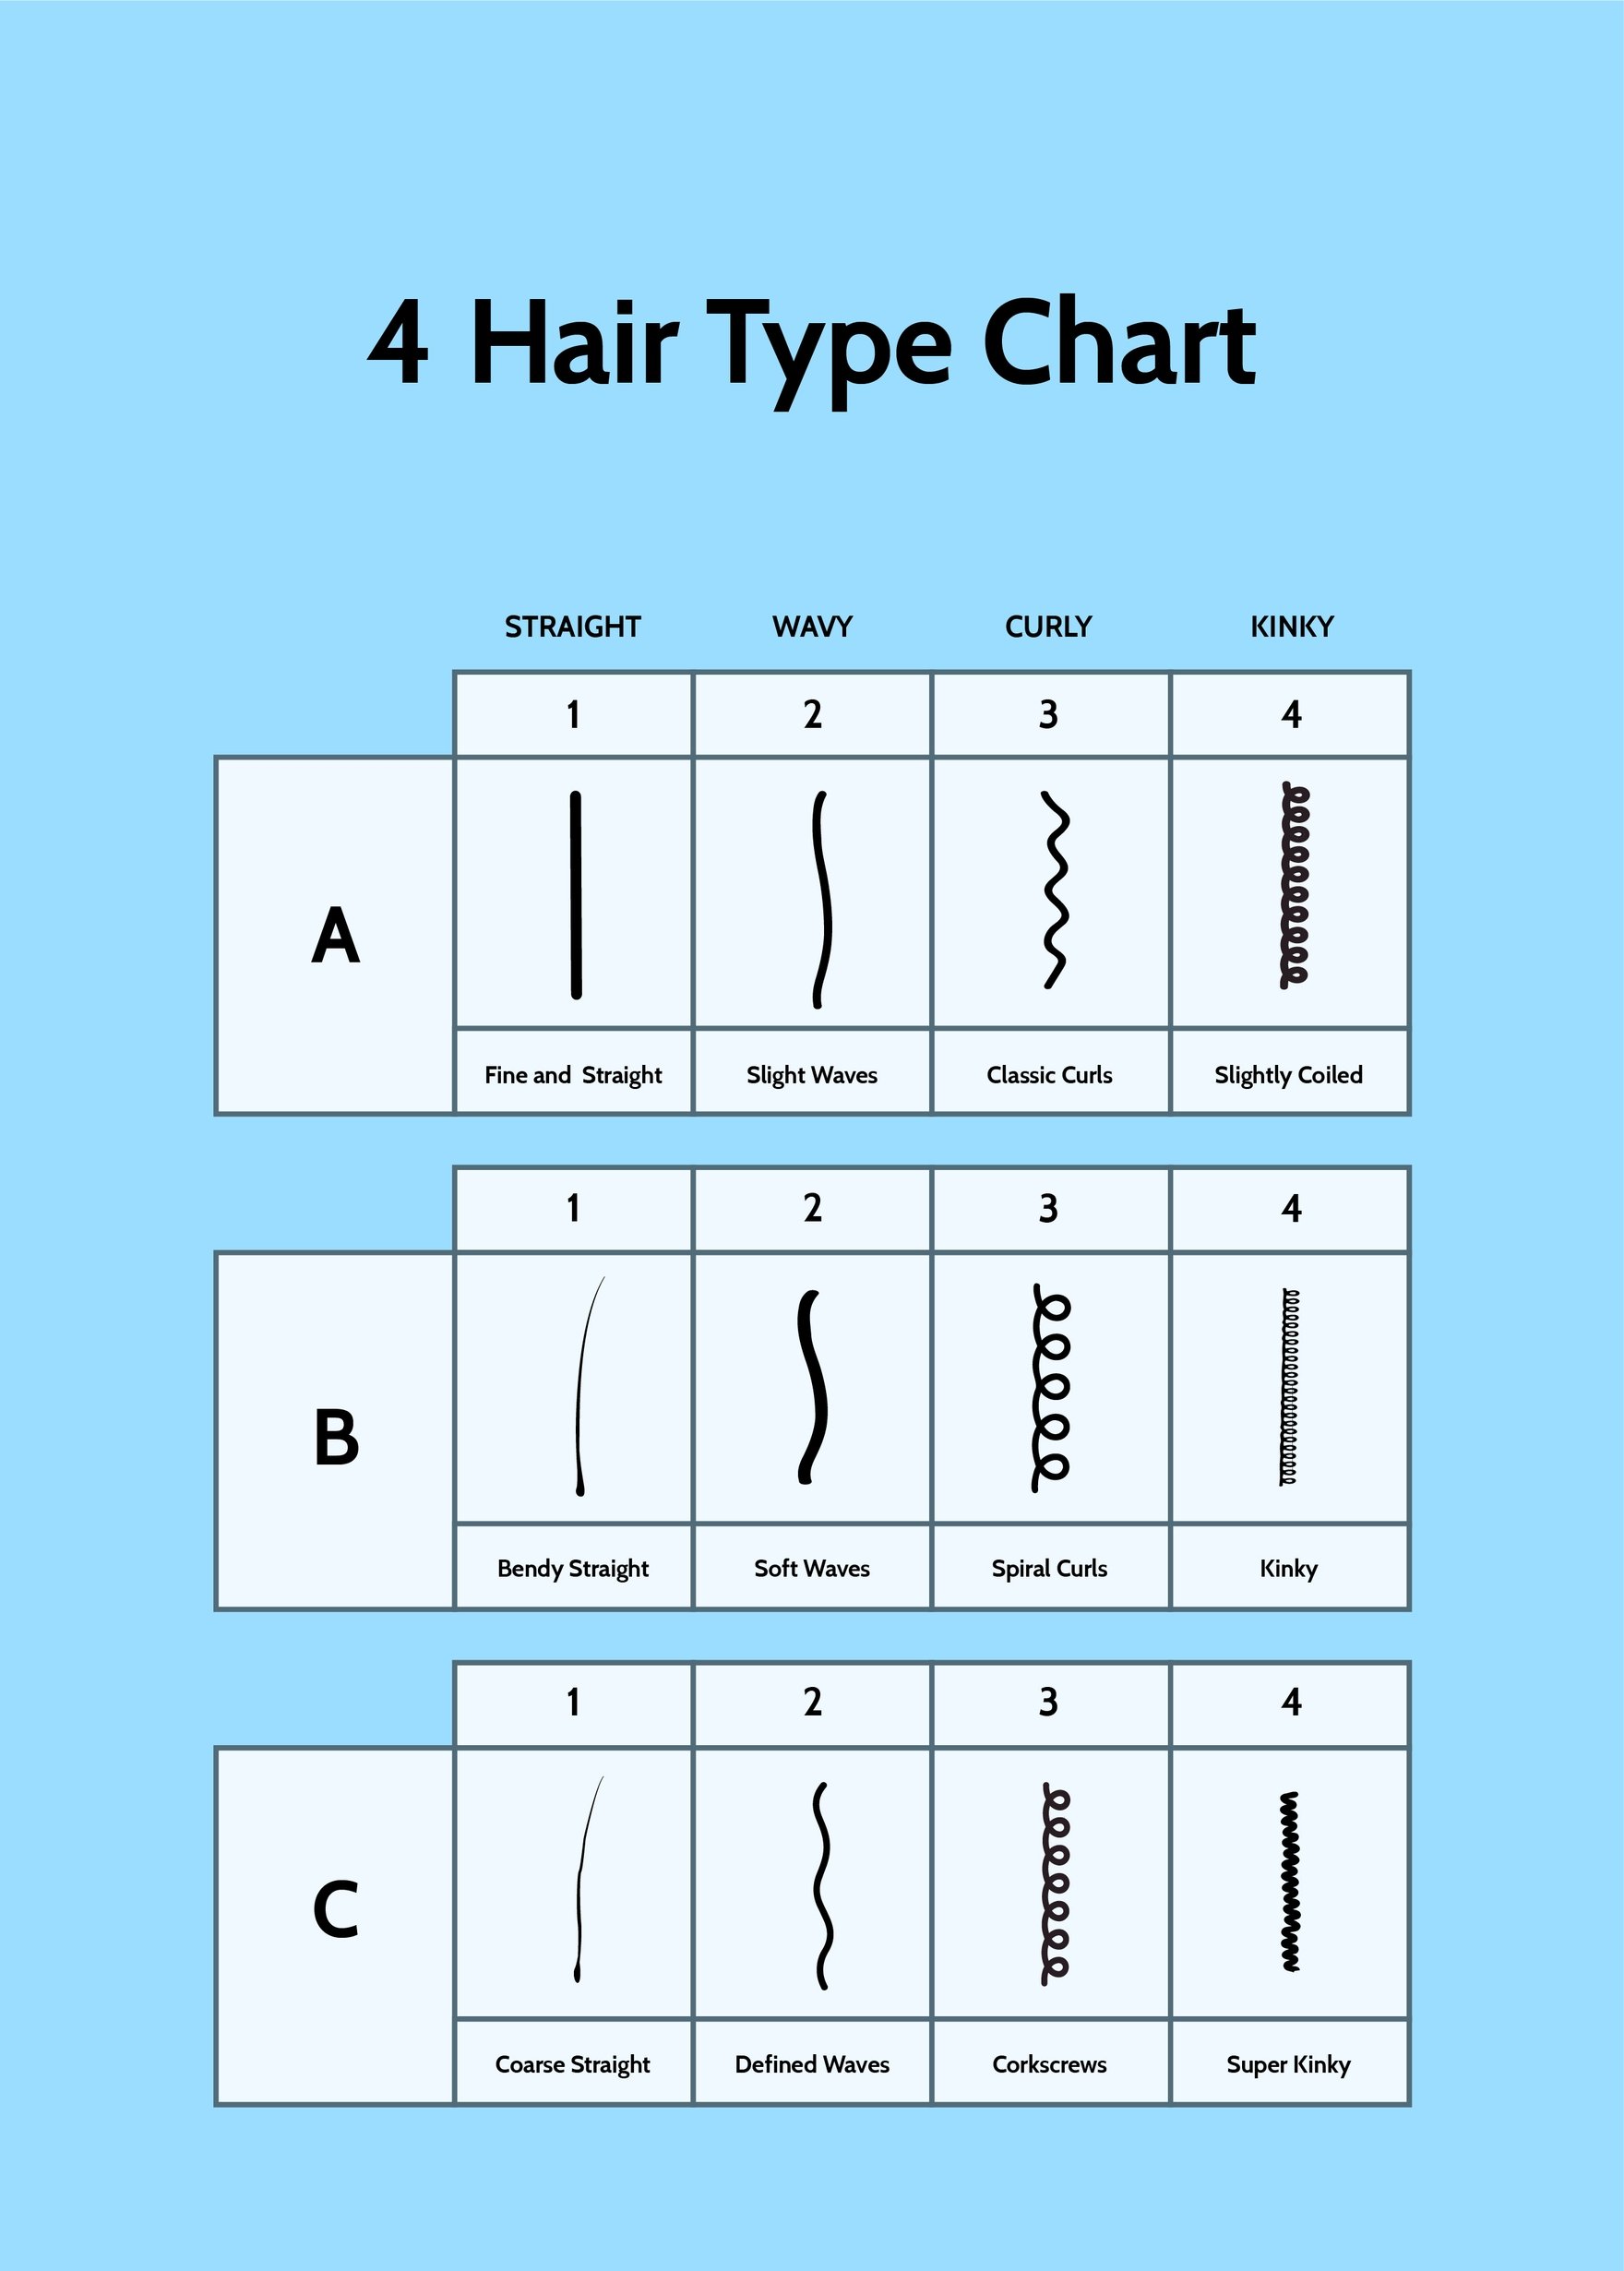 4 Hair Type Chart